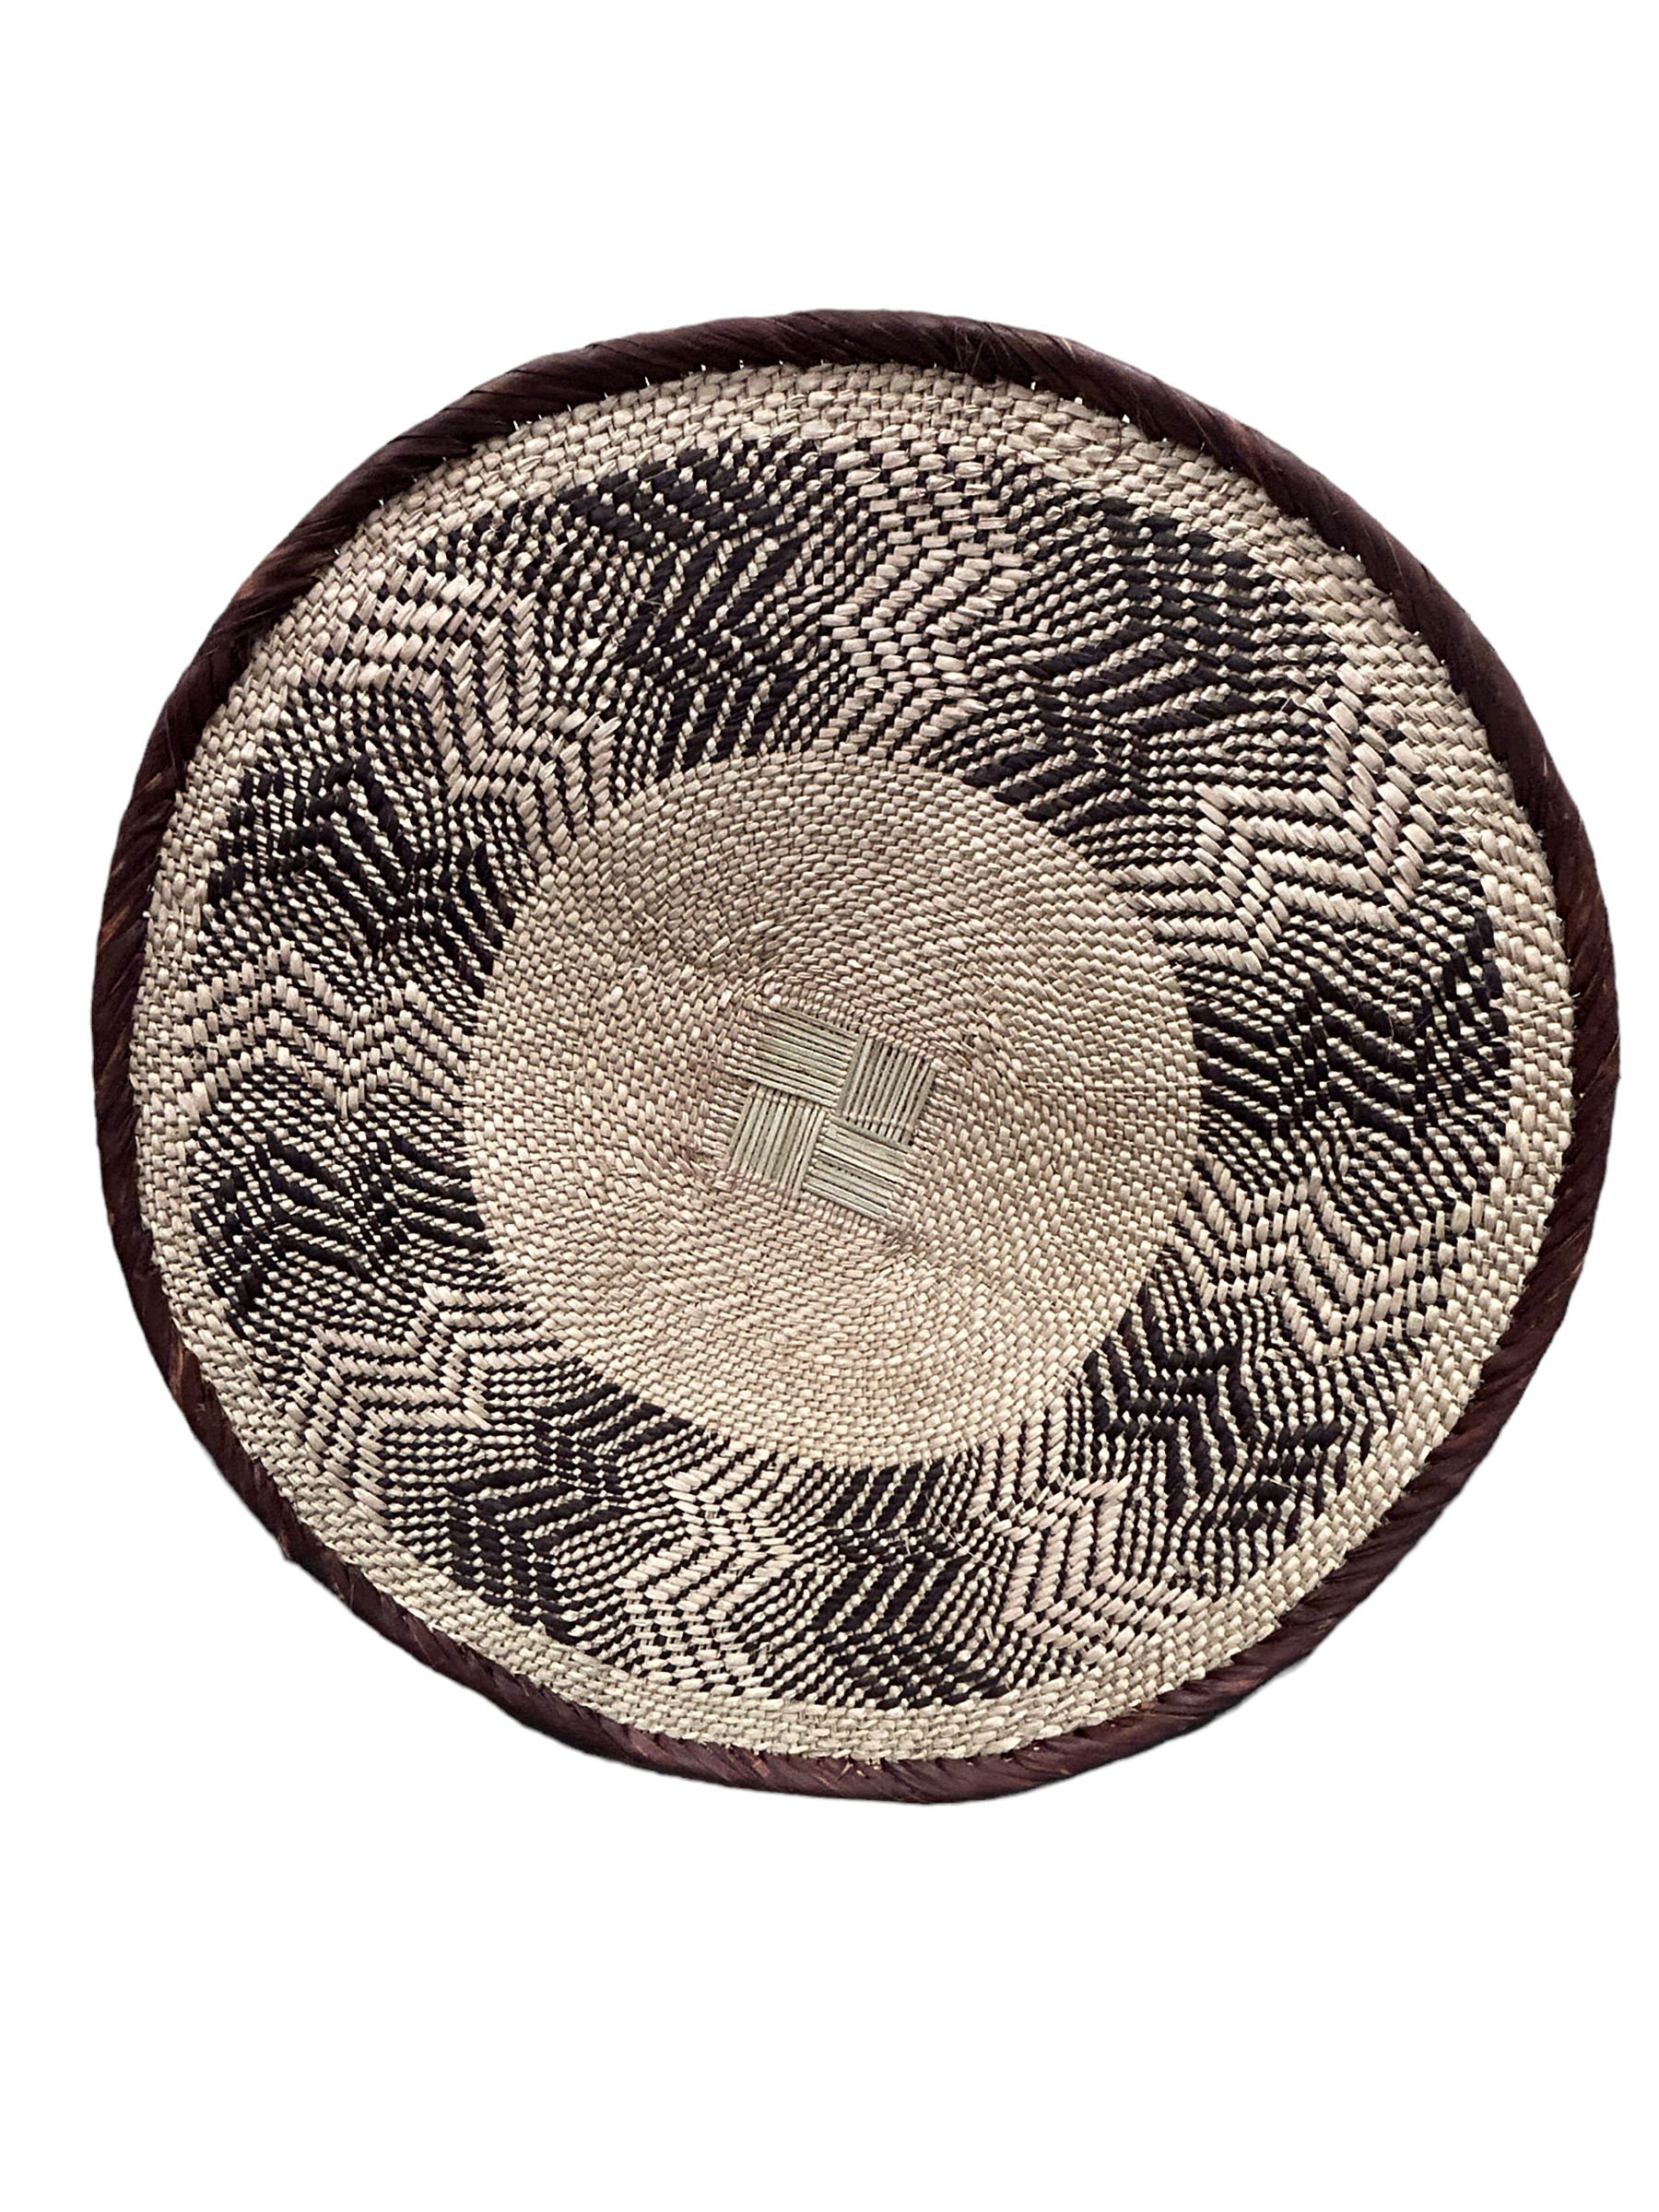 botanicalboysuk Tonga Basket Natural (60-03)